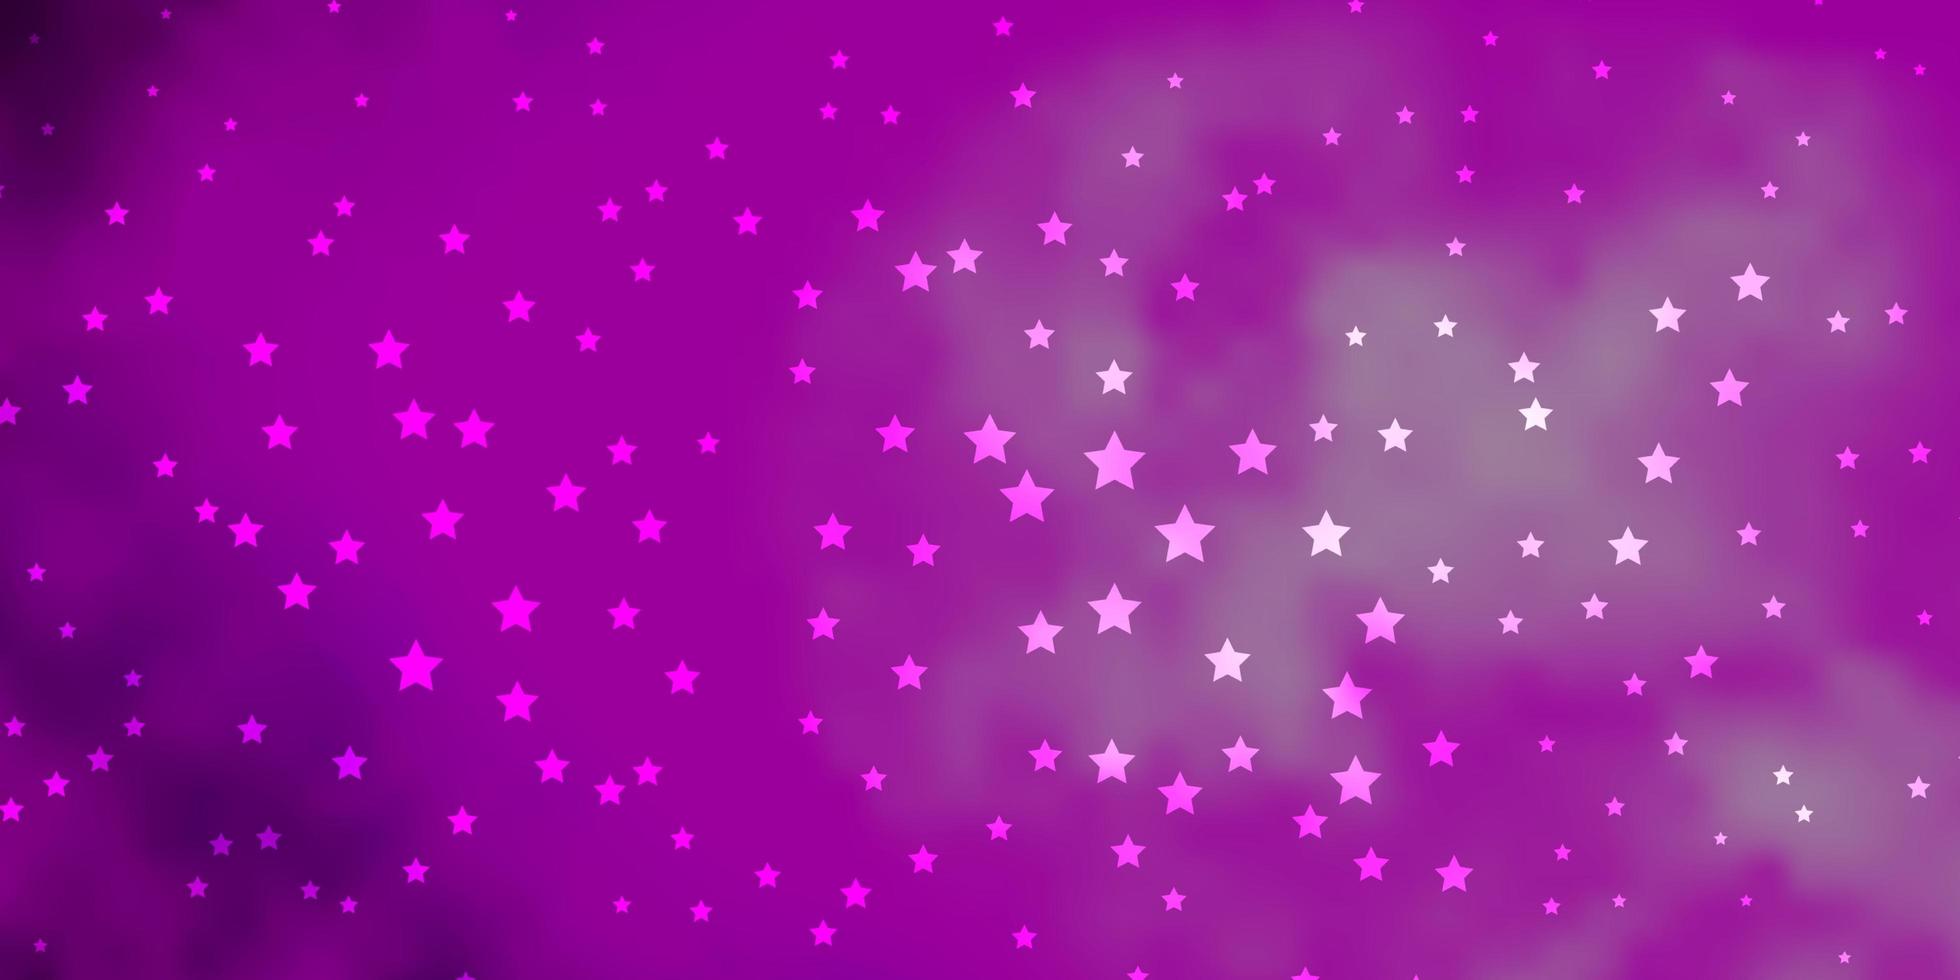 layout de vetor rosa escuro com estrelas brilhantes.